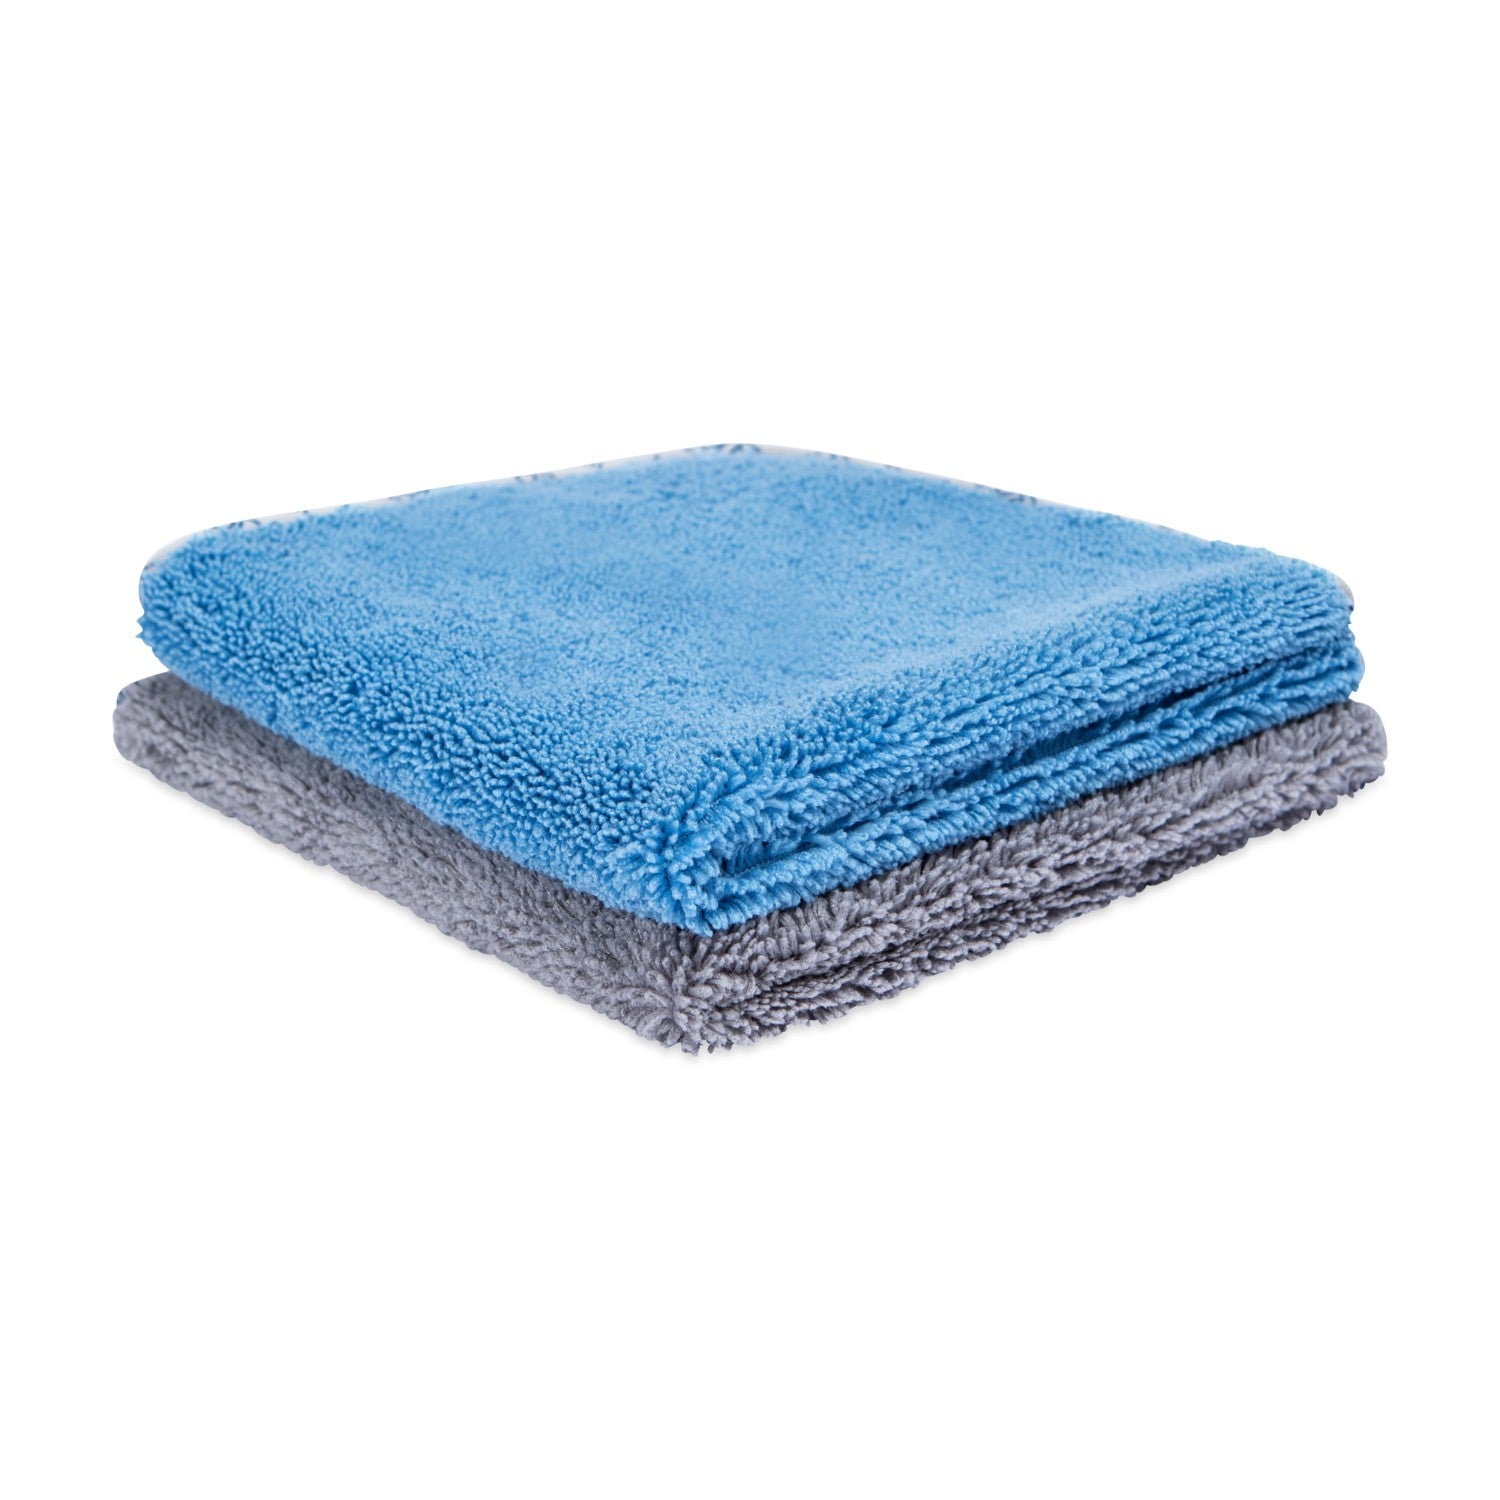 microfiber auto detailing towels